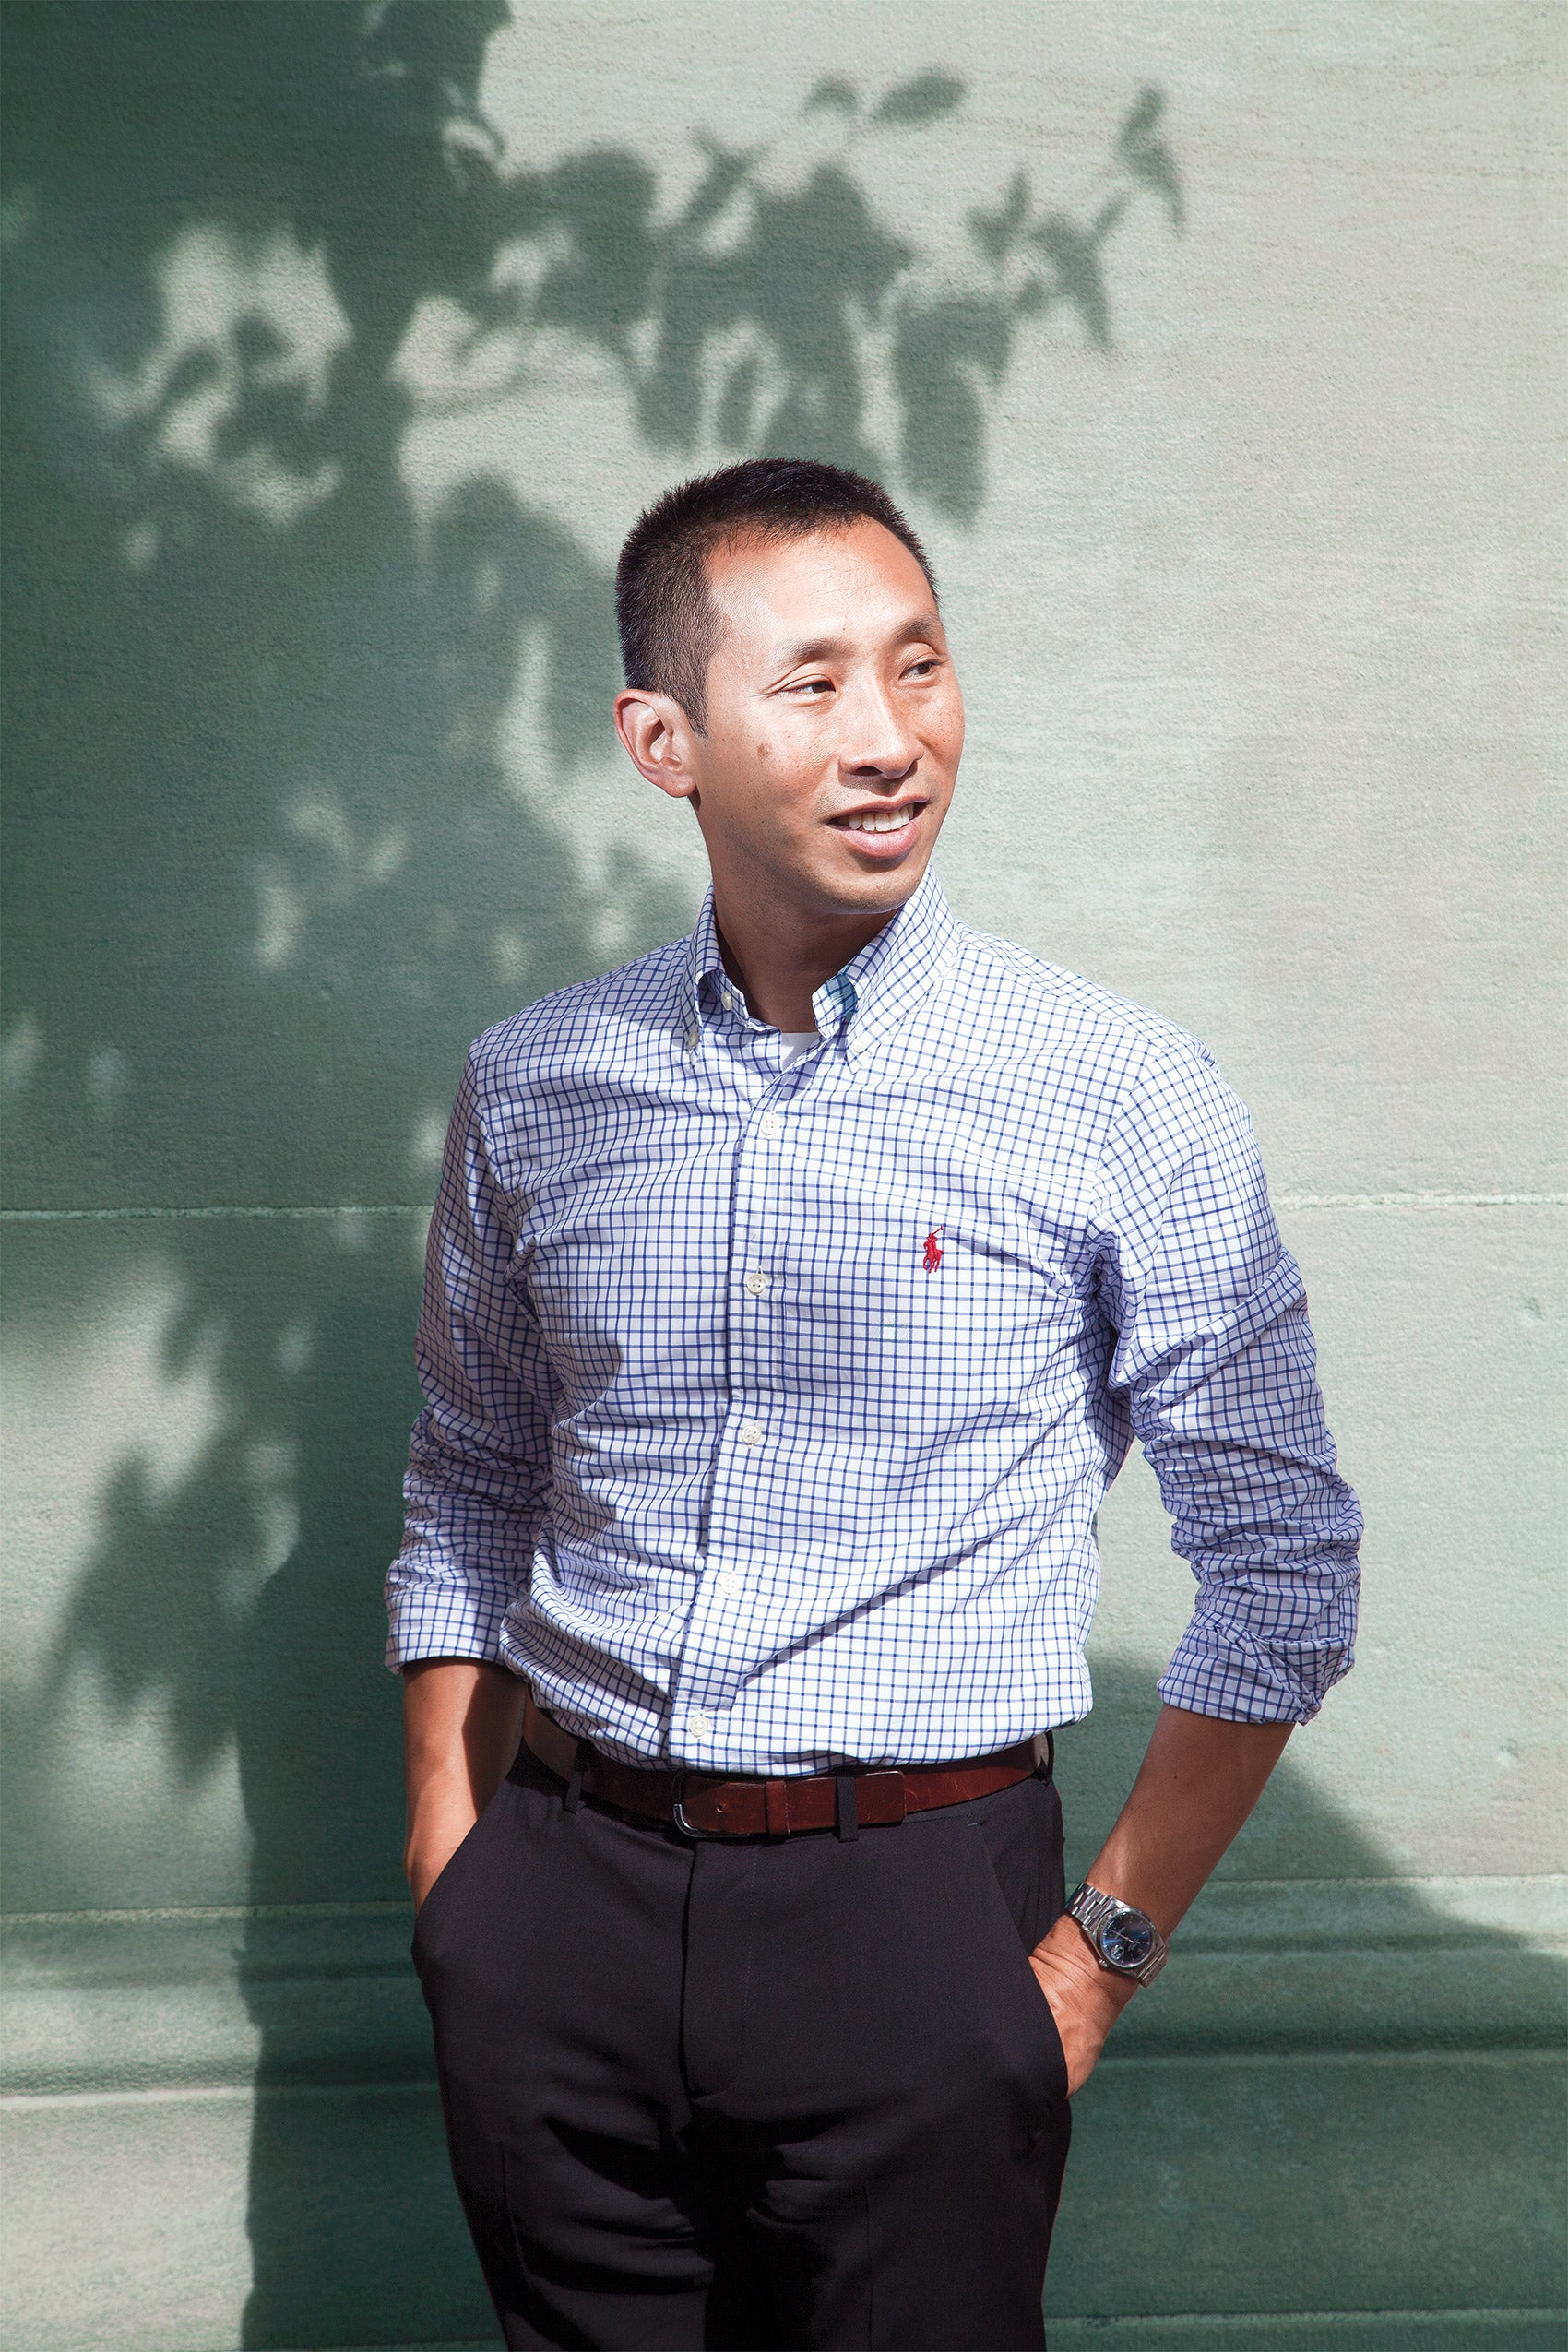 Assistant Professor Mark Wu